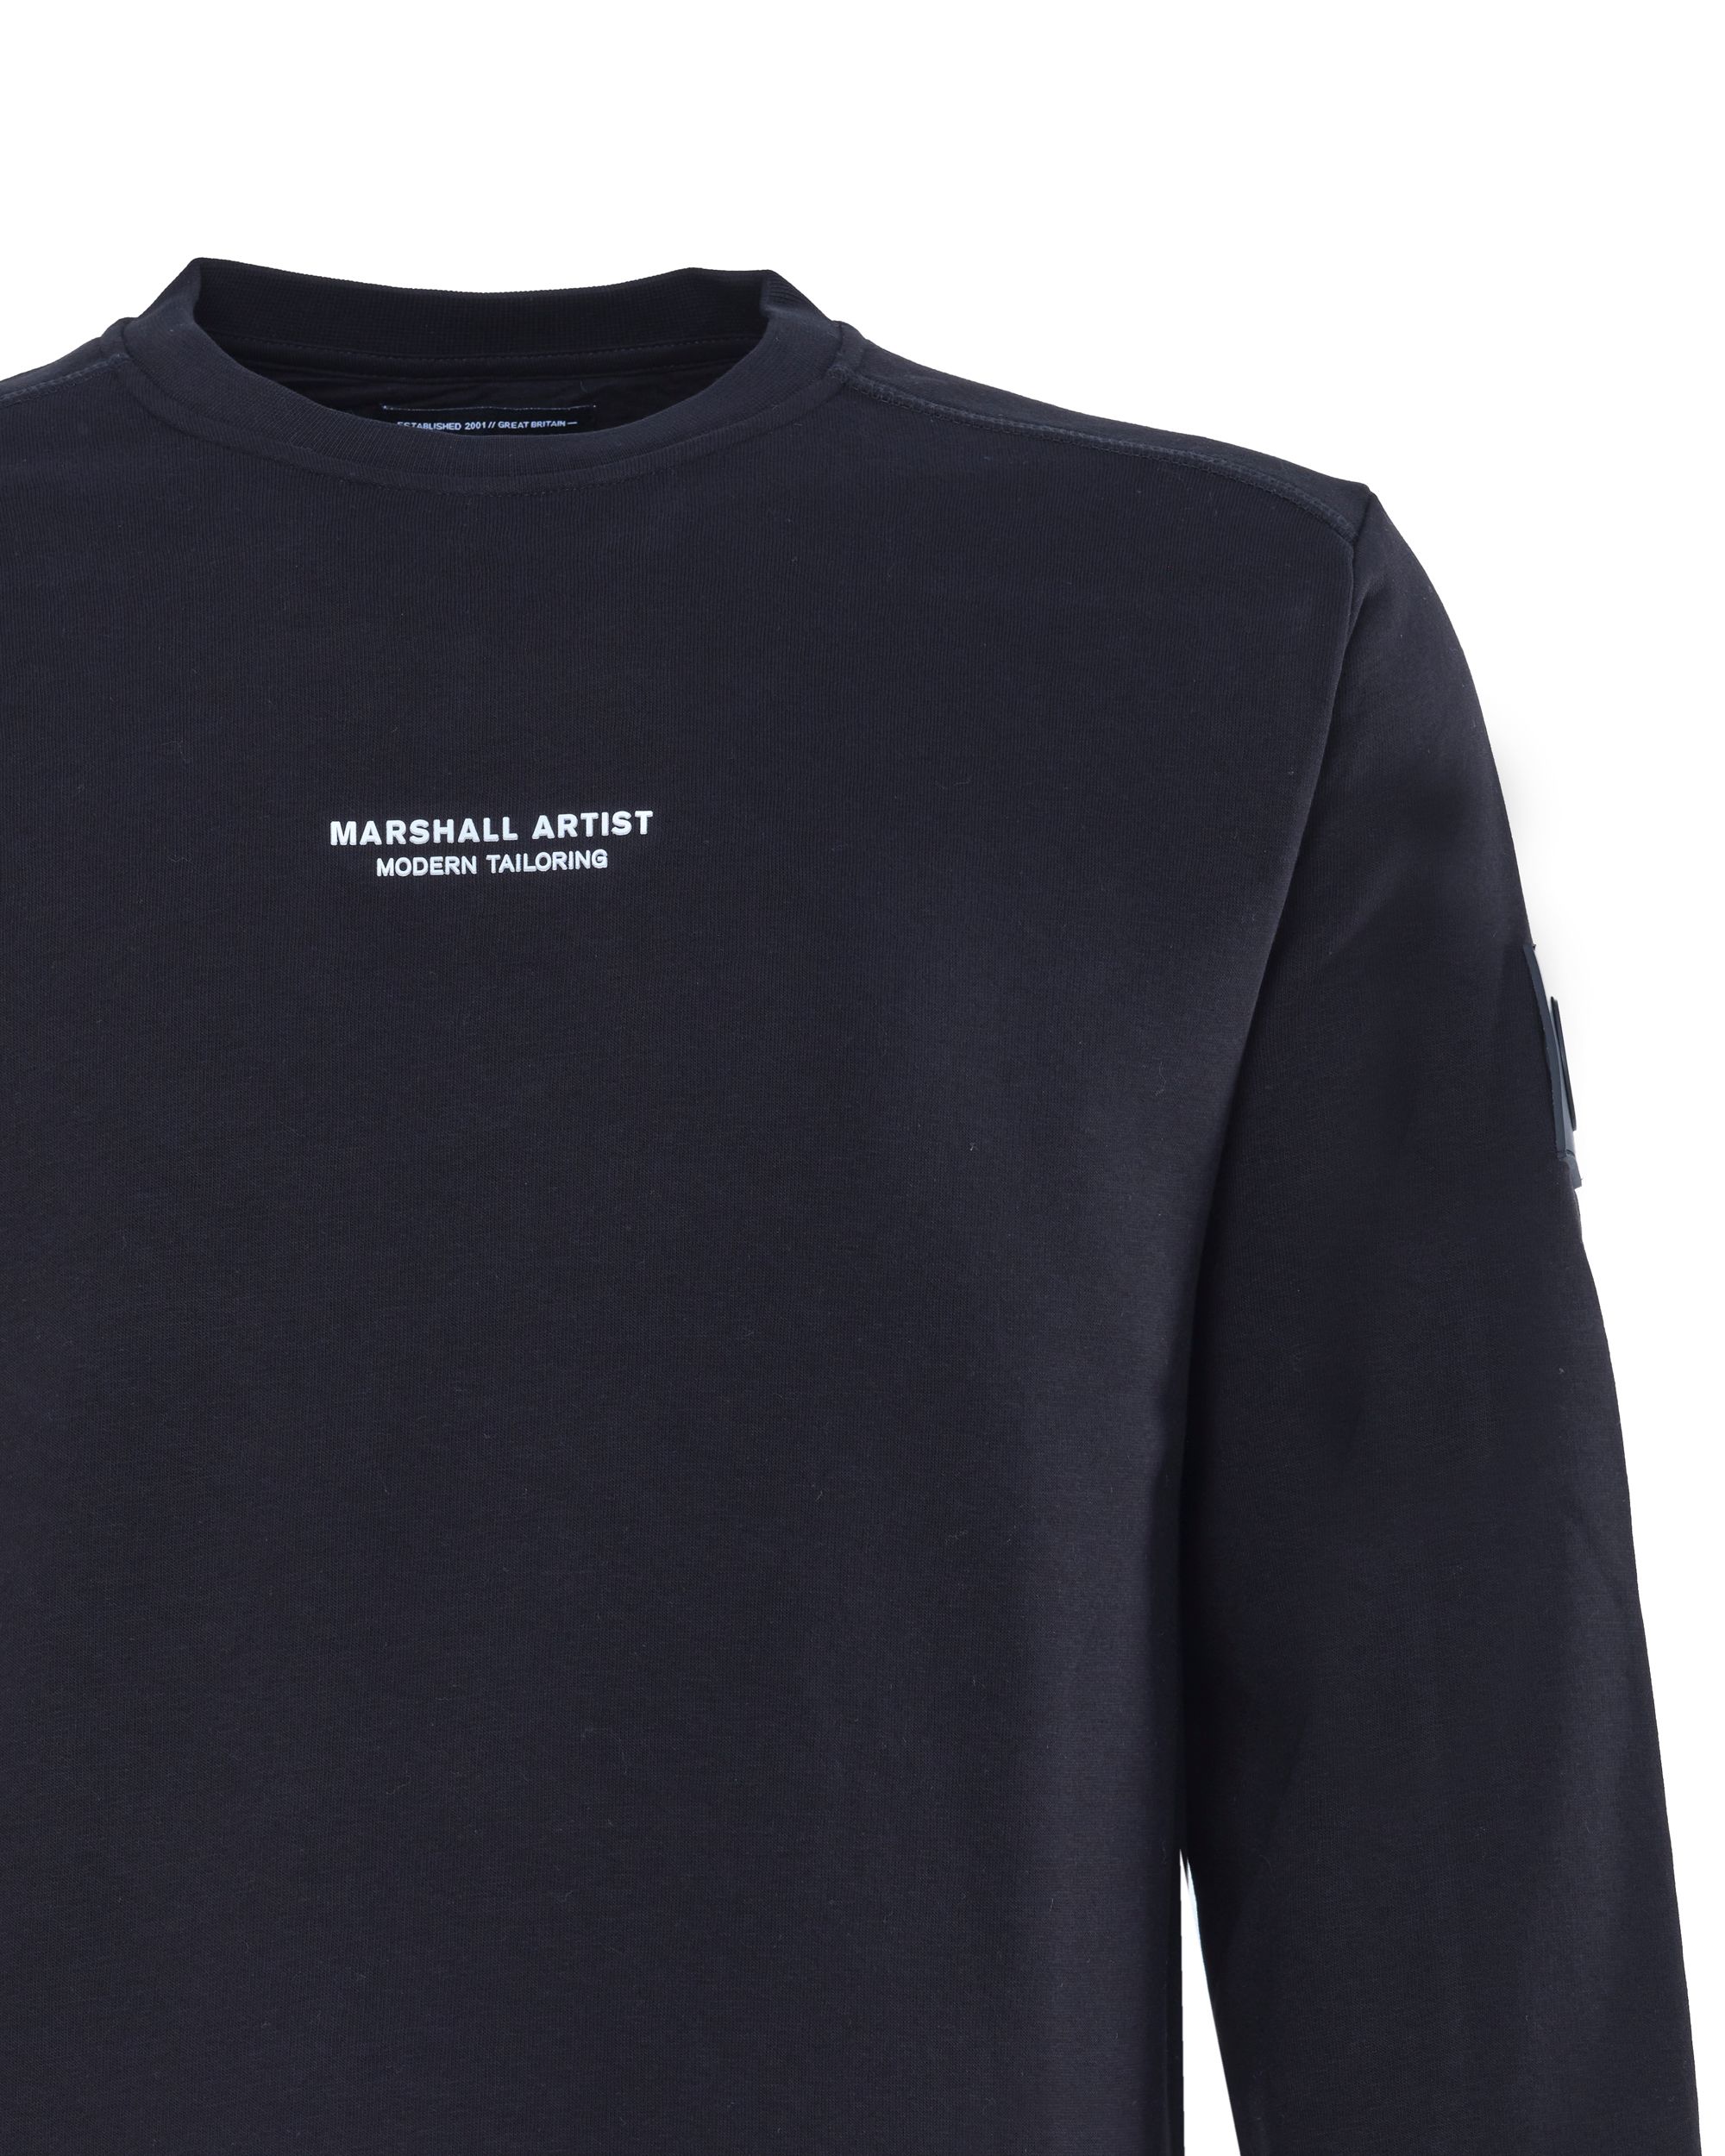 Marshall Artist Sweater Zwart 081050-001-L